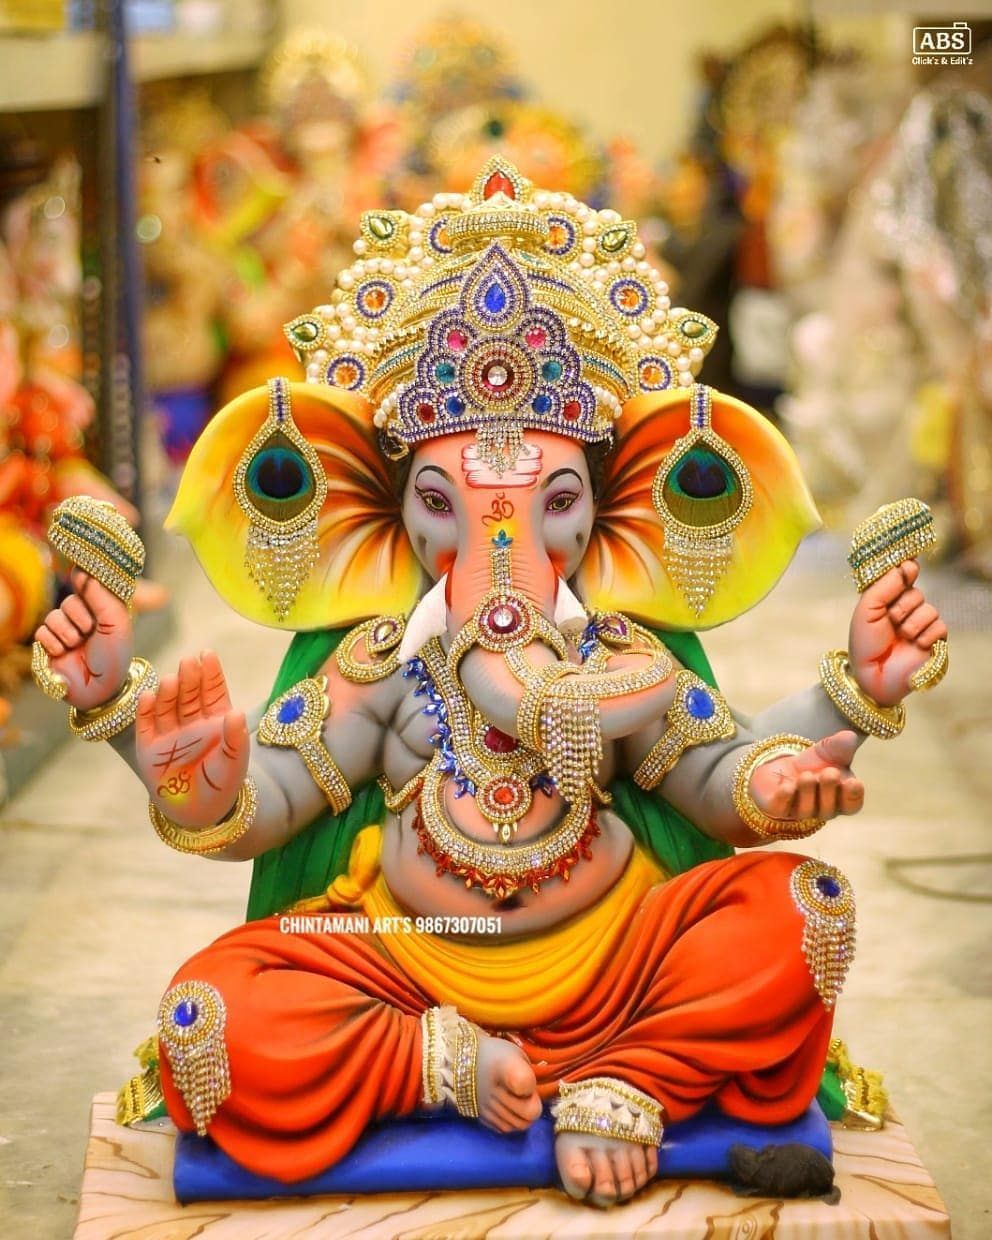 Full HD Ganesha Mobile Wallpaper photos Free Download